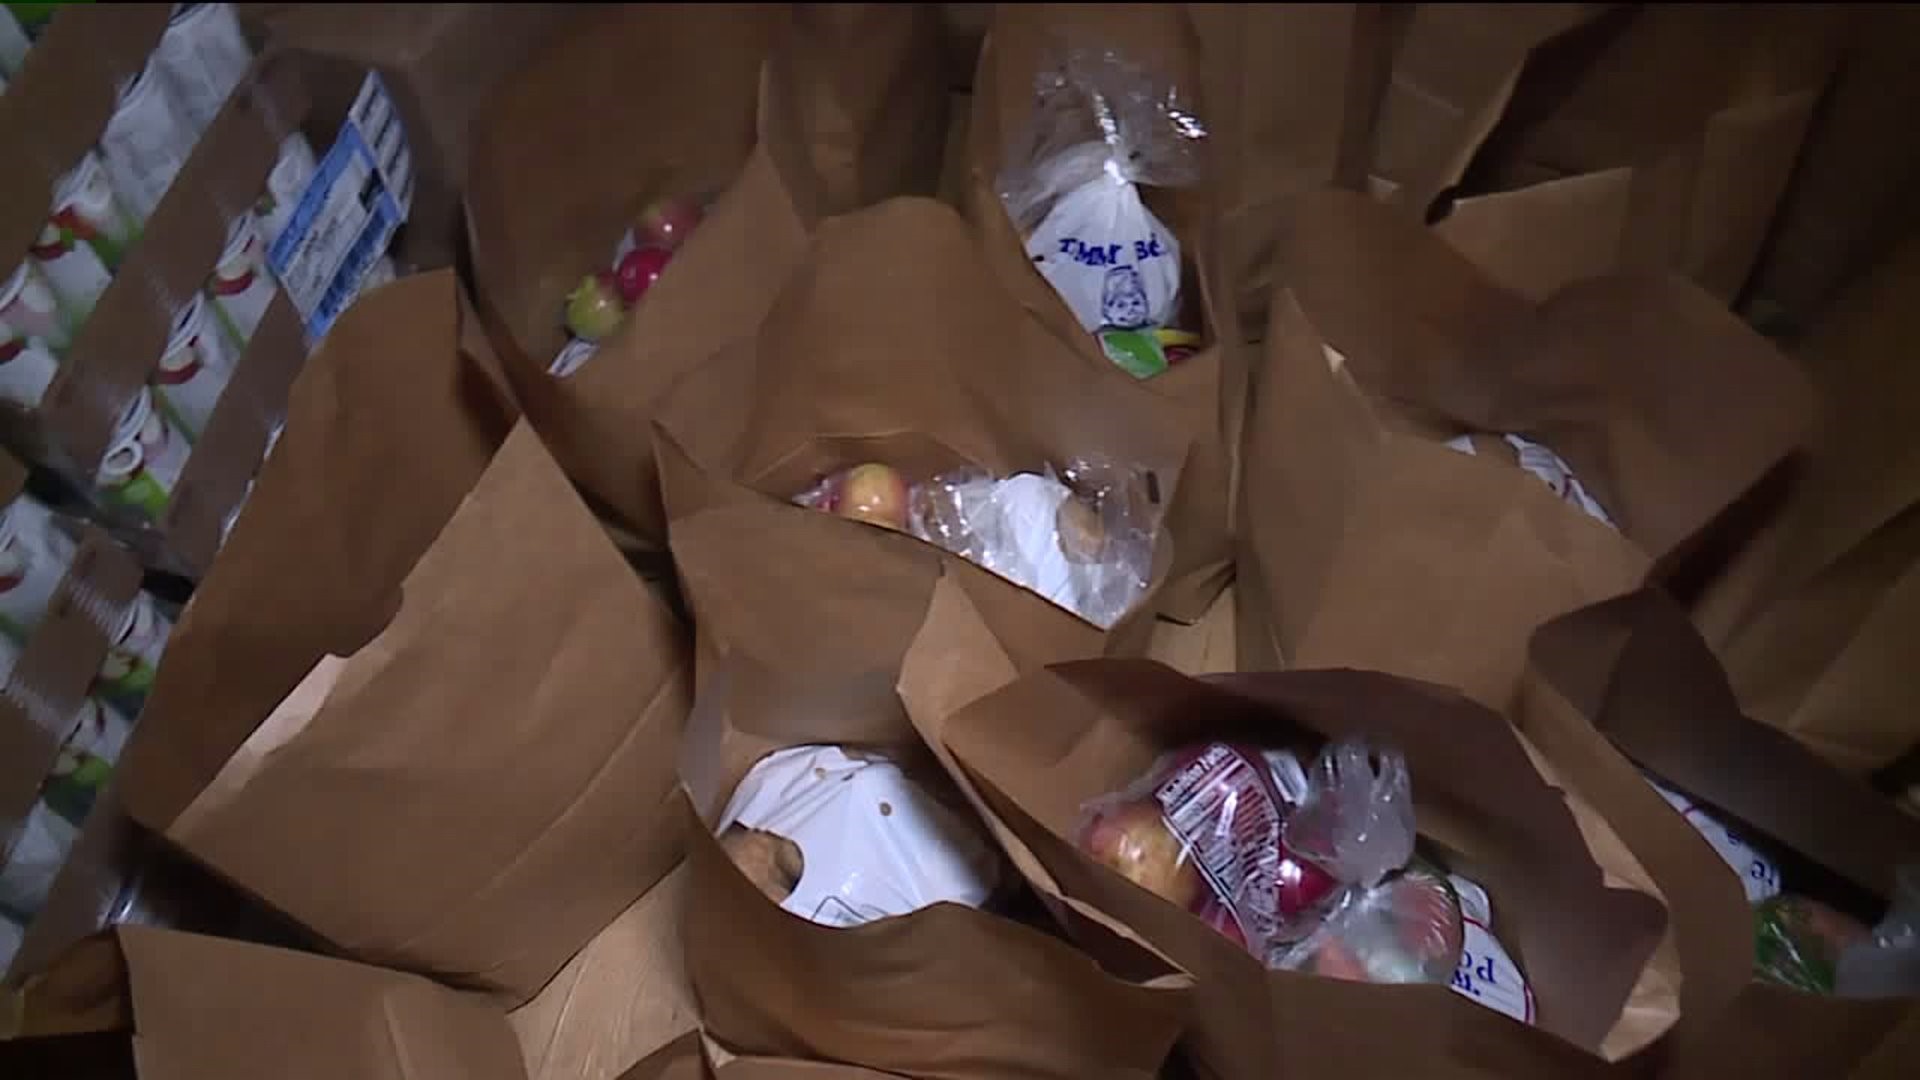 Food Basket Giveaway for Thanksgiving in Scranton